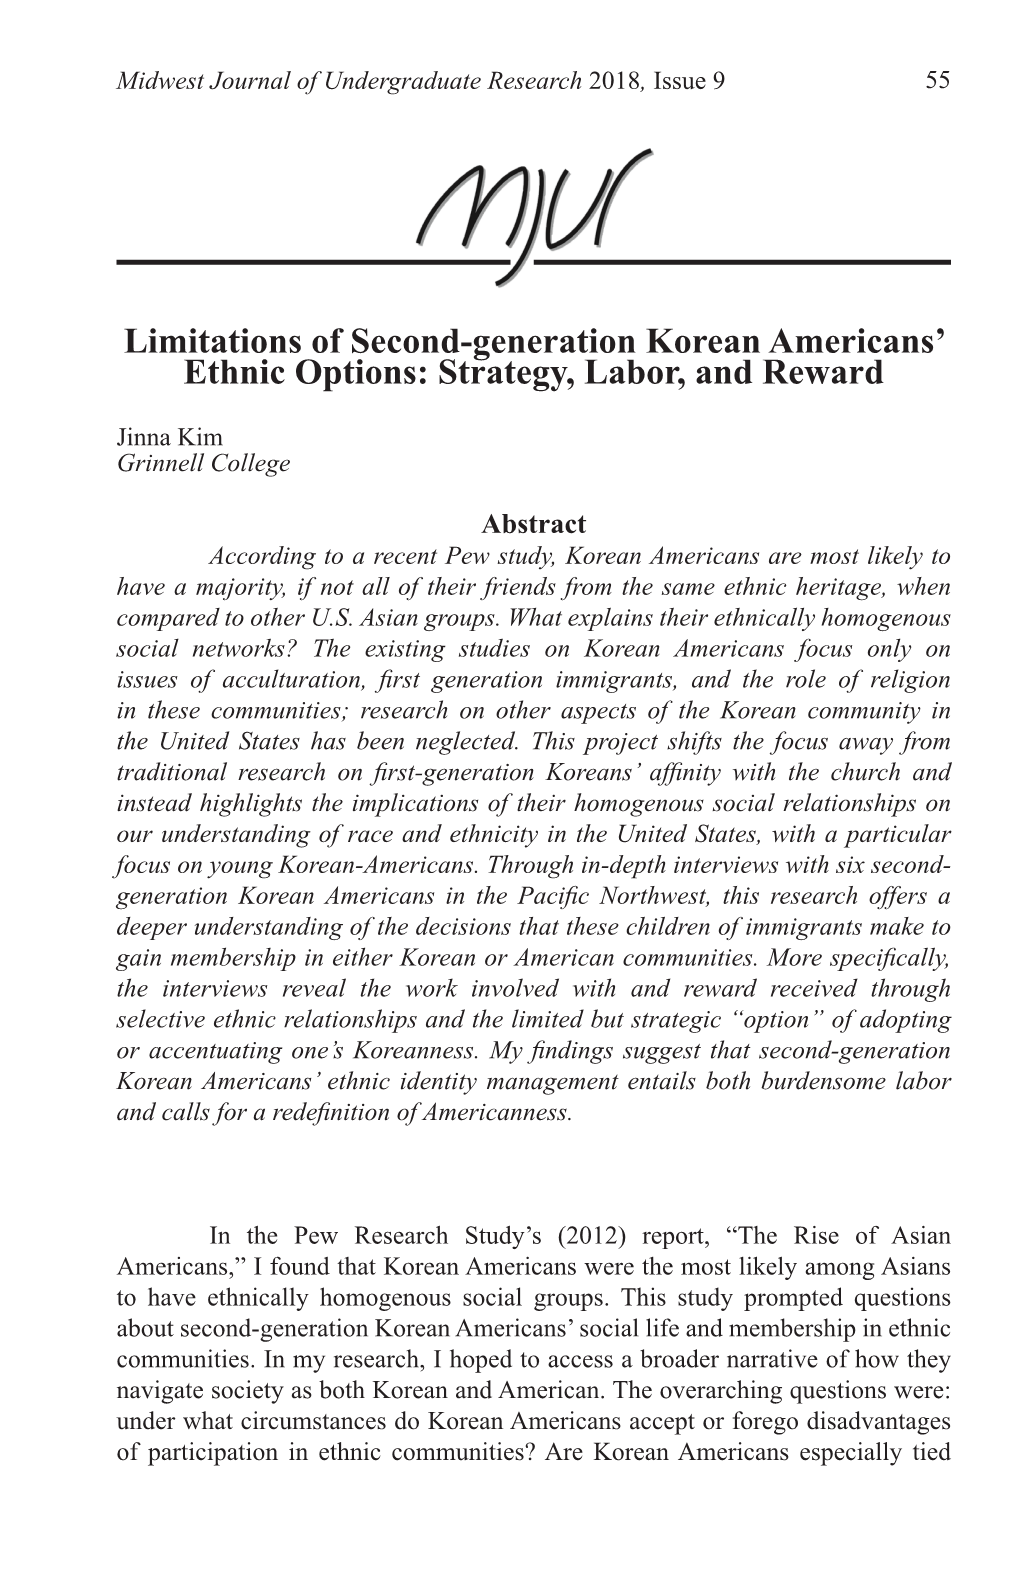 Limitations of Second-Generation Korean Americans' Ethnic Options